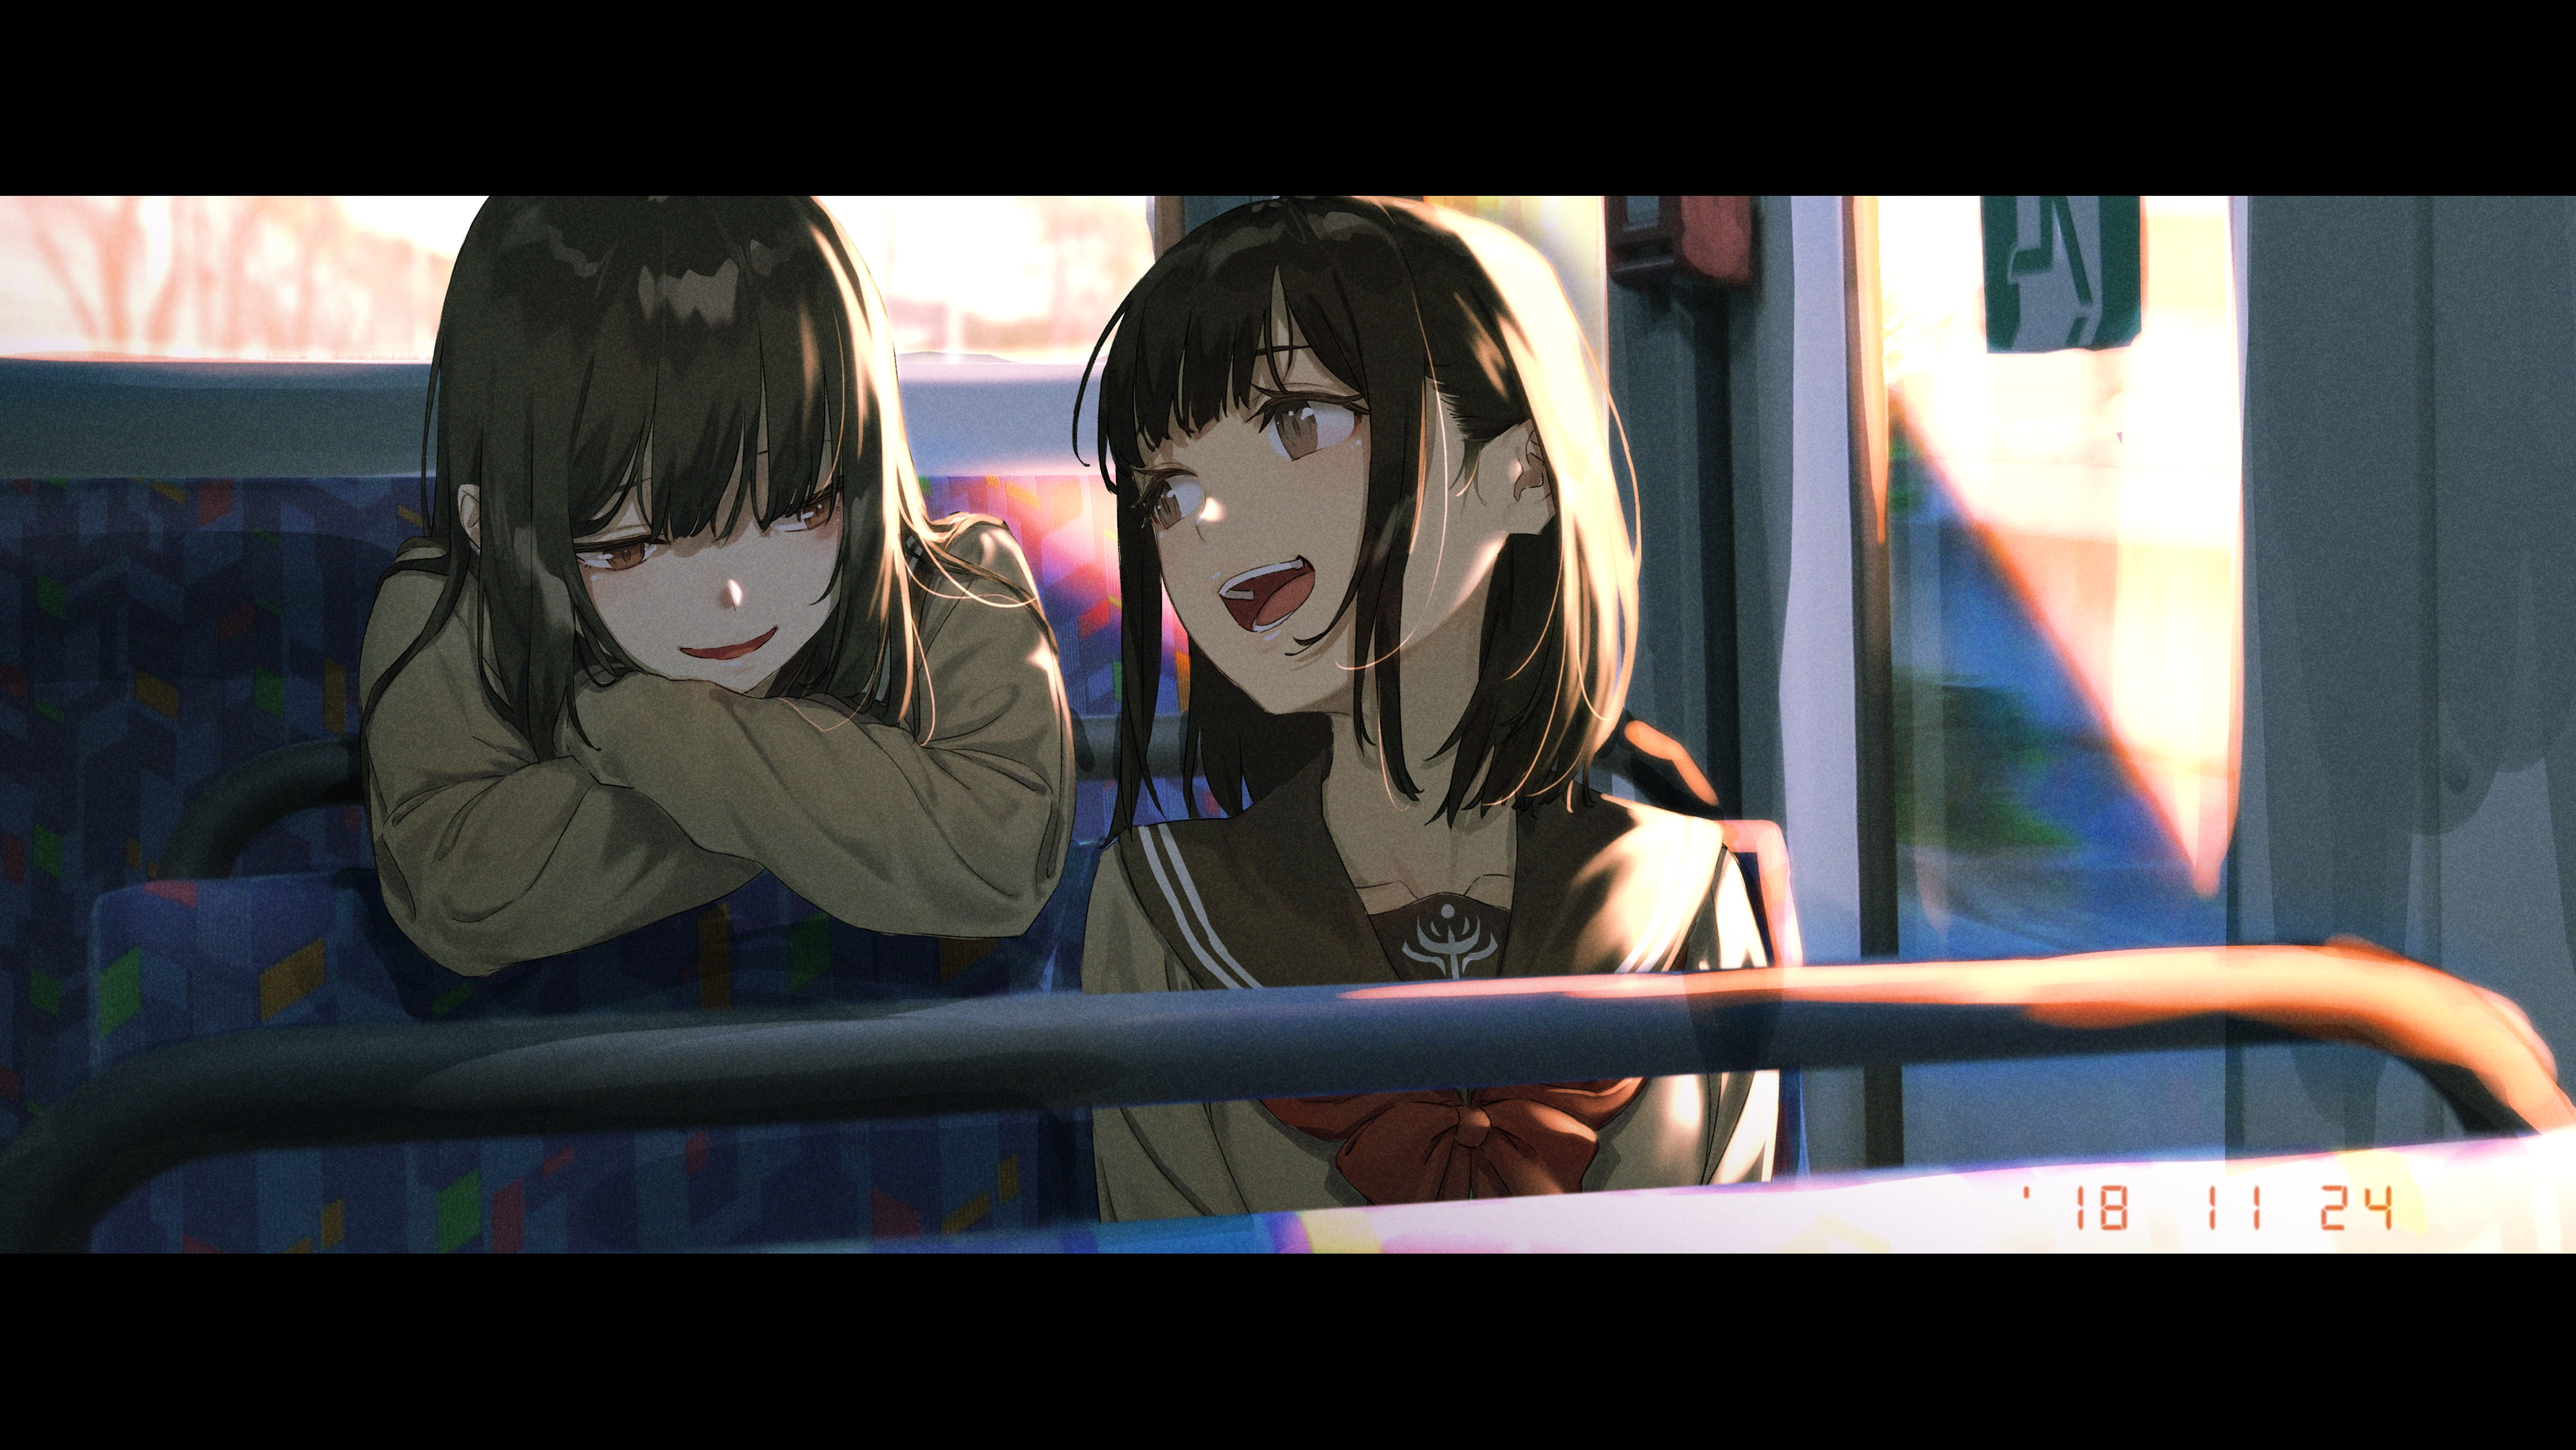 anime girls, schoolgirl, buses, two women, smiling, happy, artwork